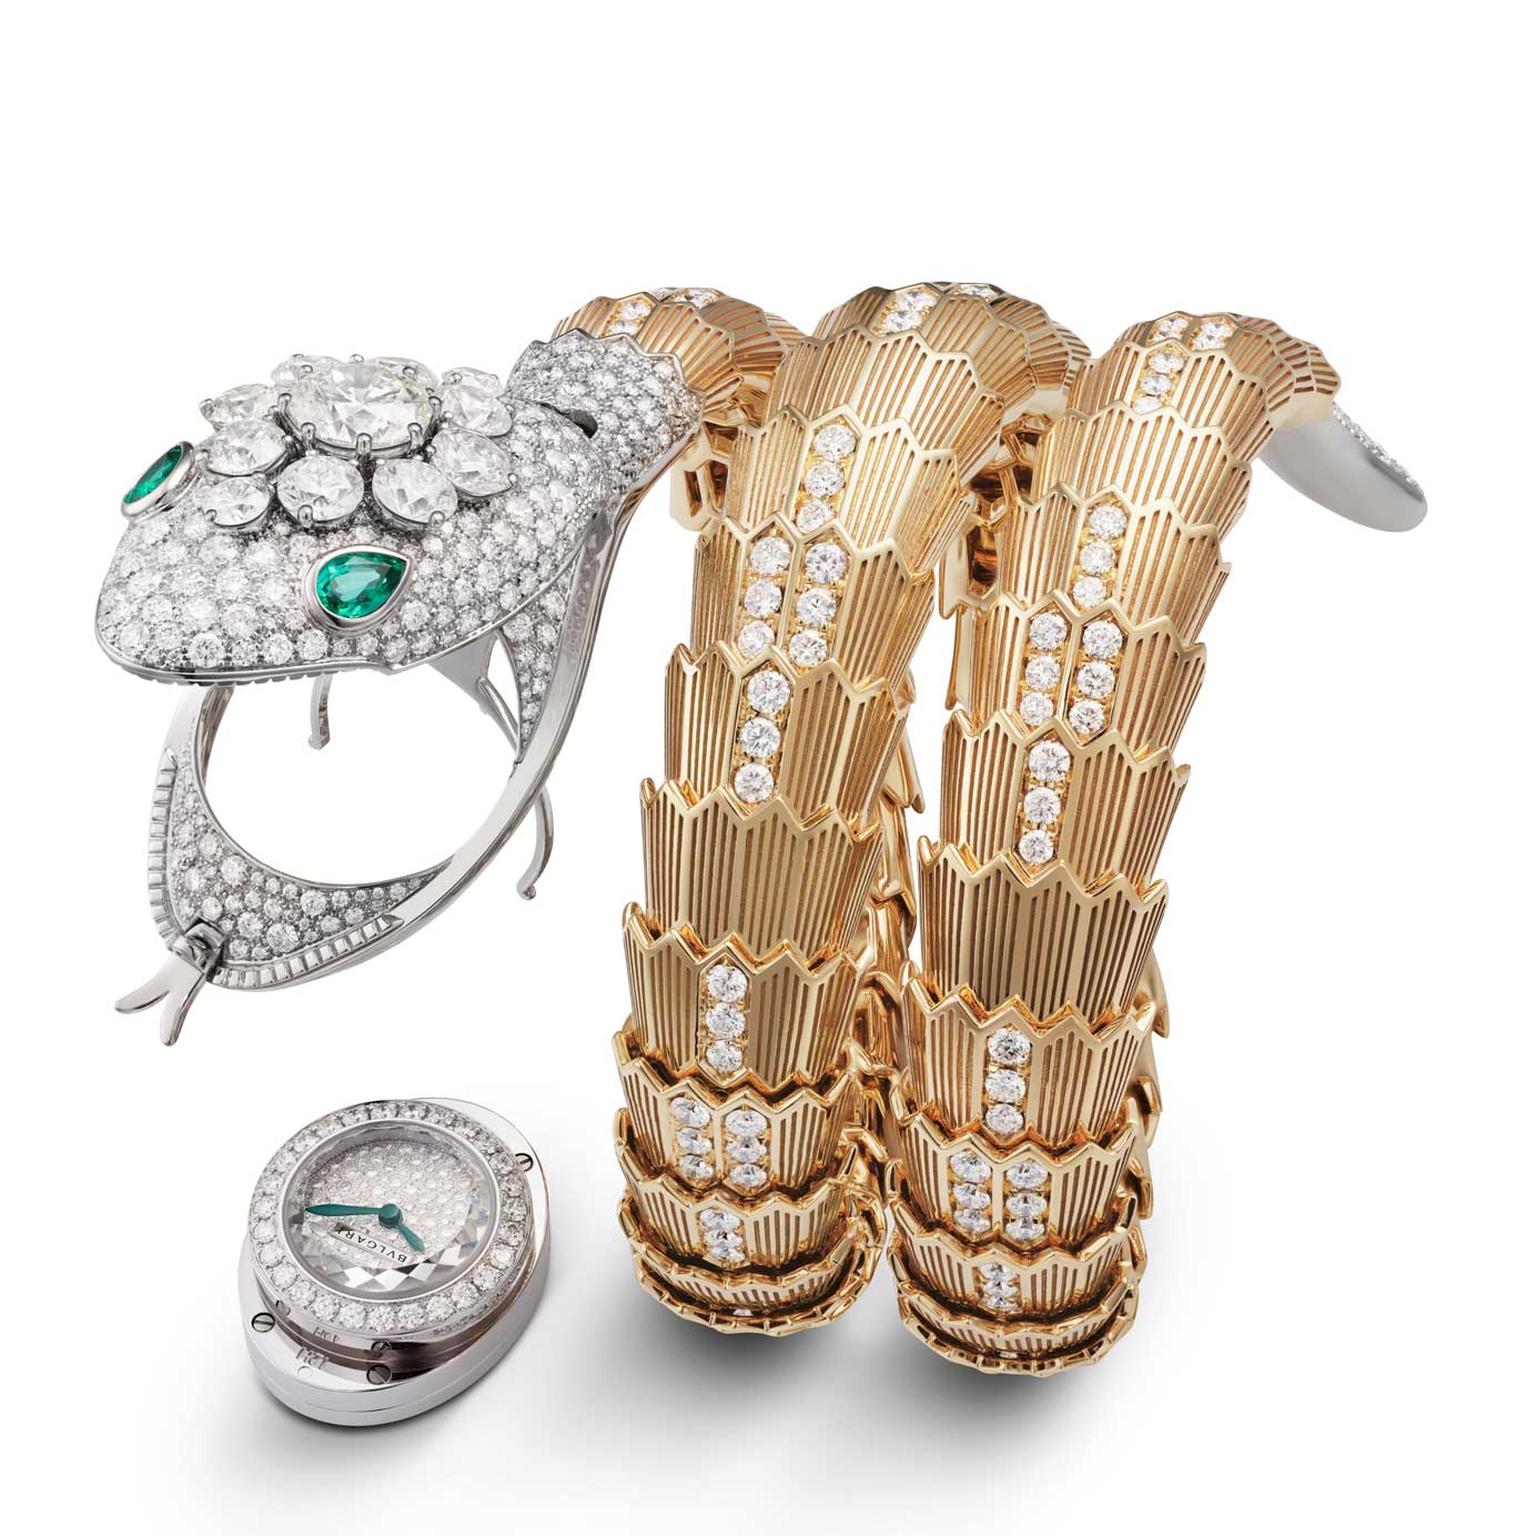 Bulgari-Serpenti-Misteriosi-Piccolissimo-Secret-high-jewellery-watch-set-with-diamonds-and-emeralds